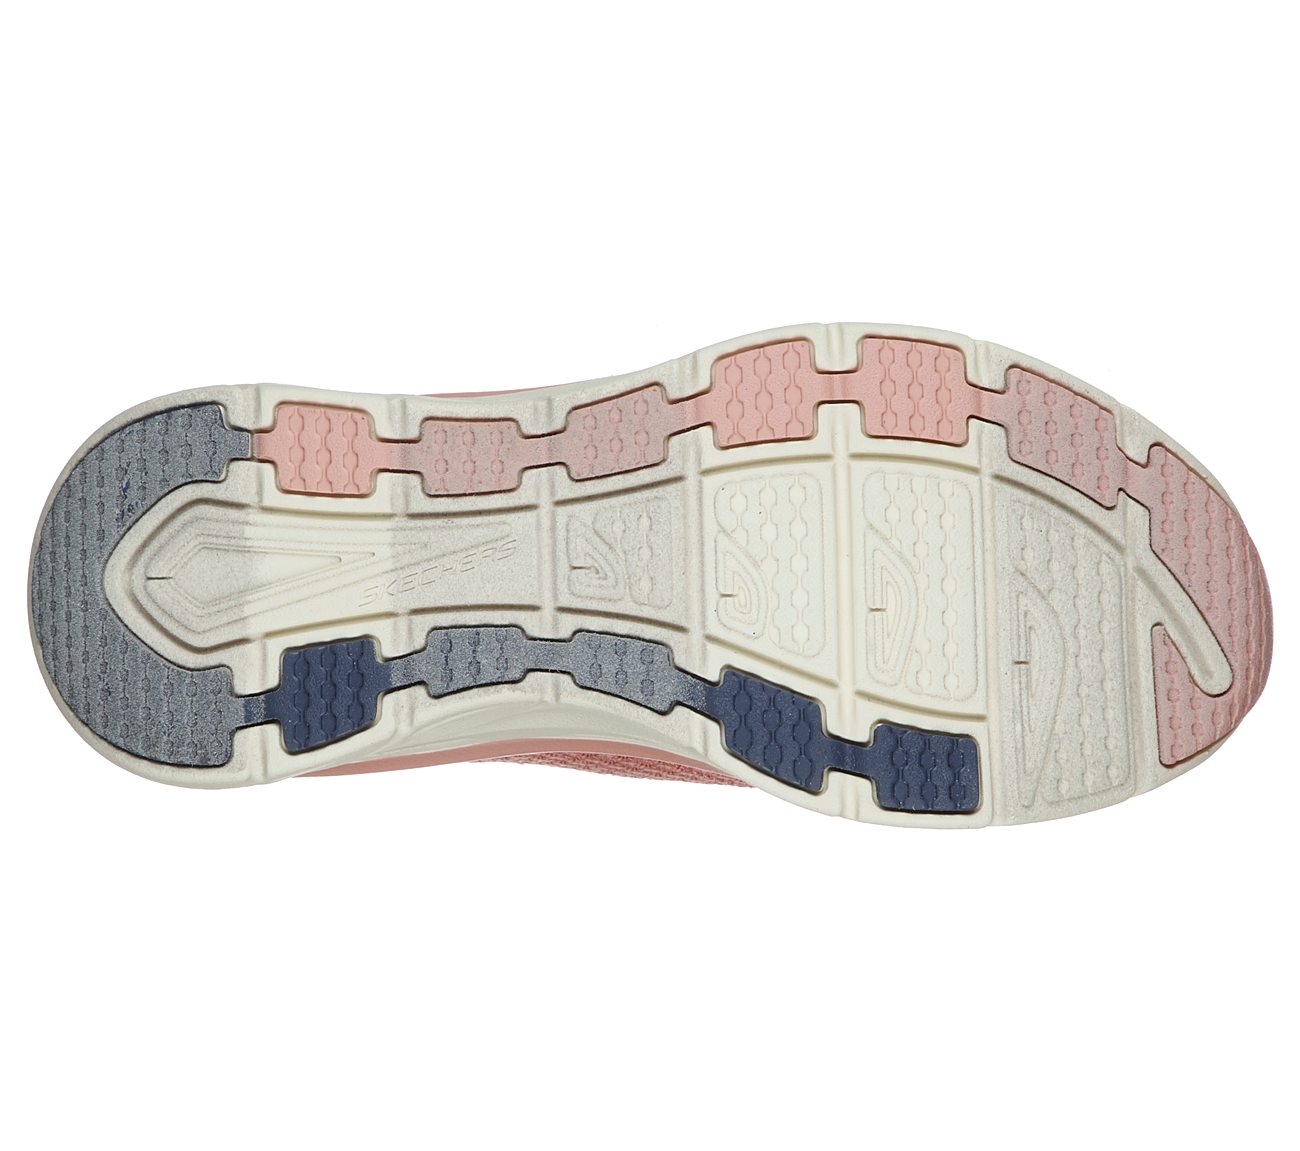 D'LUX WALKER - RUNNING VISION, ROSE Footwear Bottom View